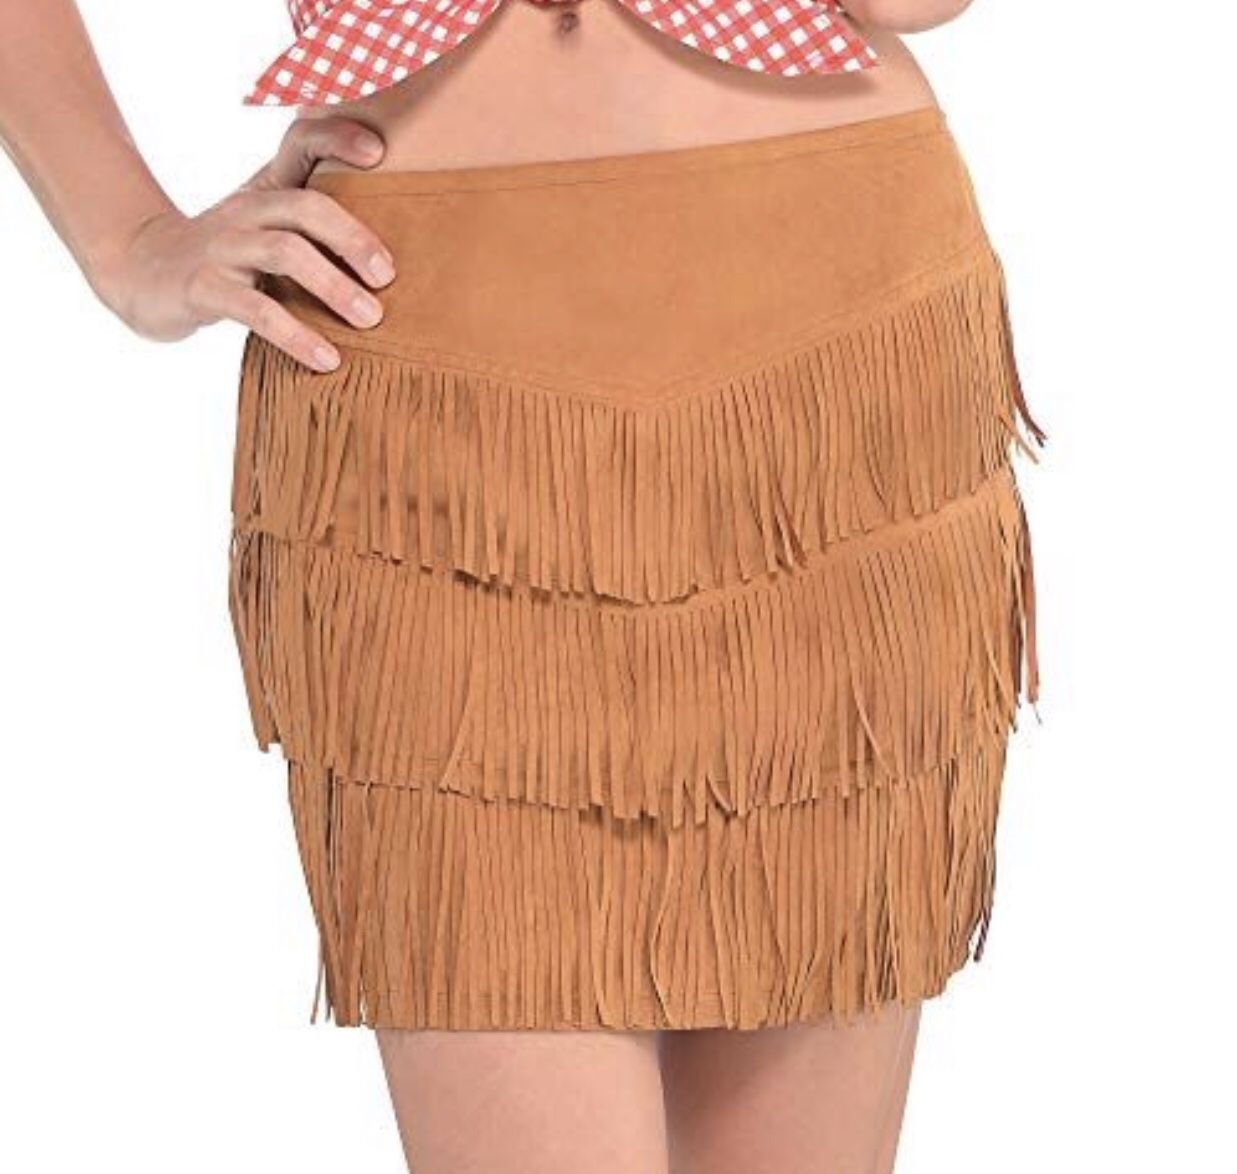 West Fringed Skirt for Halloween Costume Adult Standard NEW